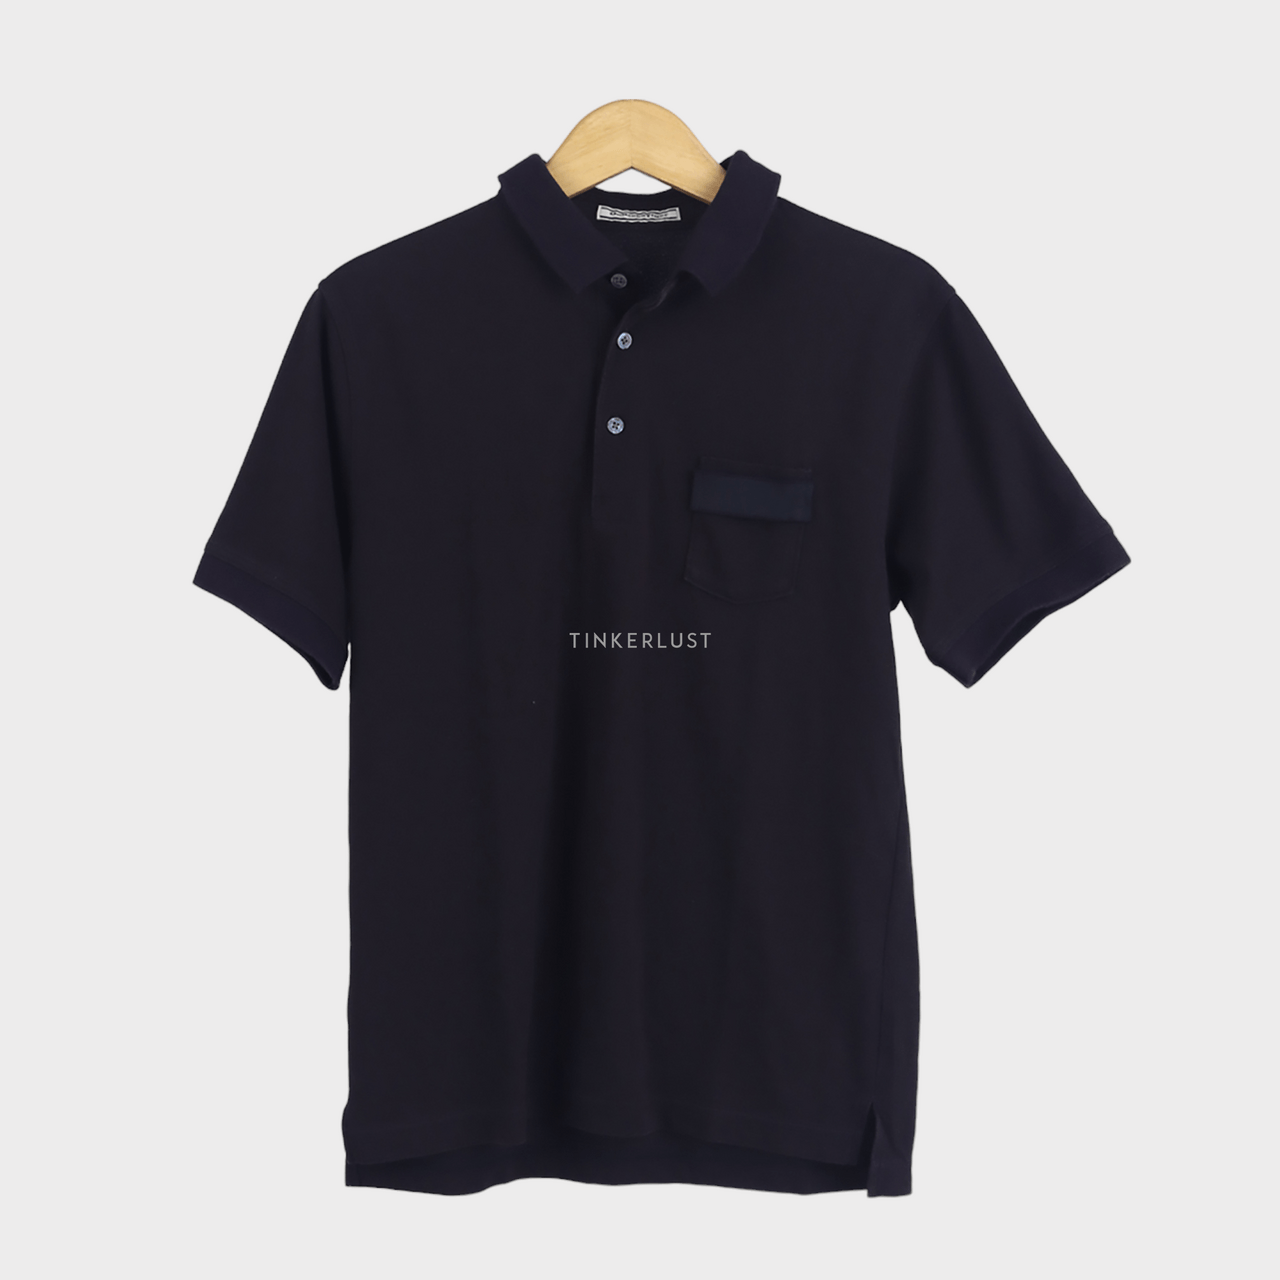 Onitsuka Tiger Black Polo Shirt	